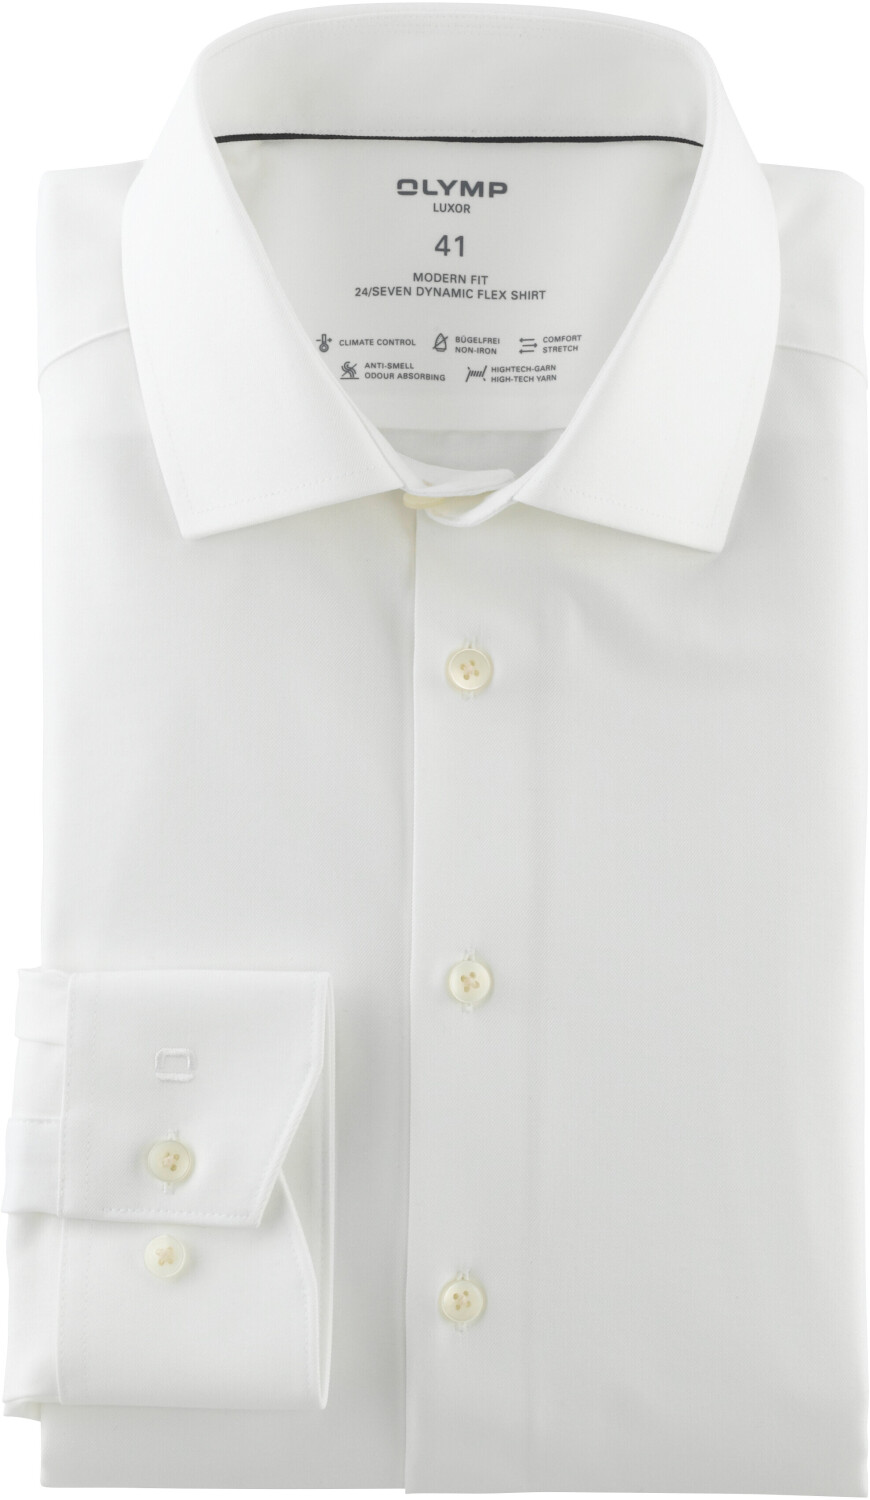 € Kent Global Luxor OLYMP Fit bei ab (1230-24-20) 39,99 beige Preisvergleich Hemd | 24/Seven Modern